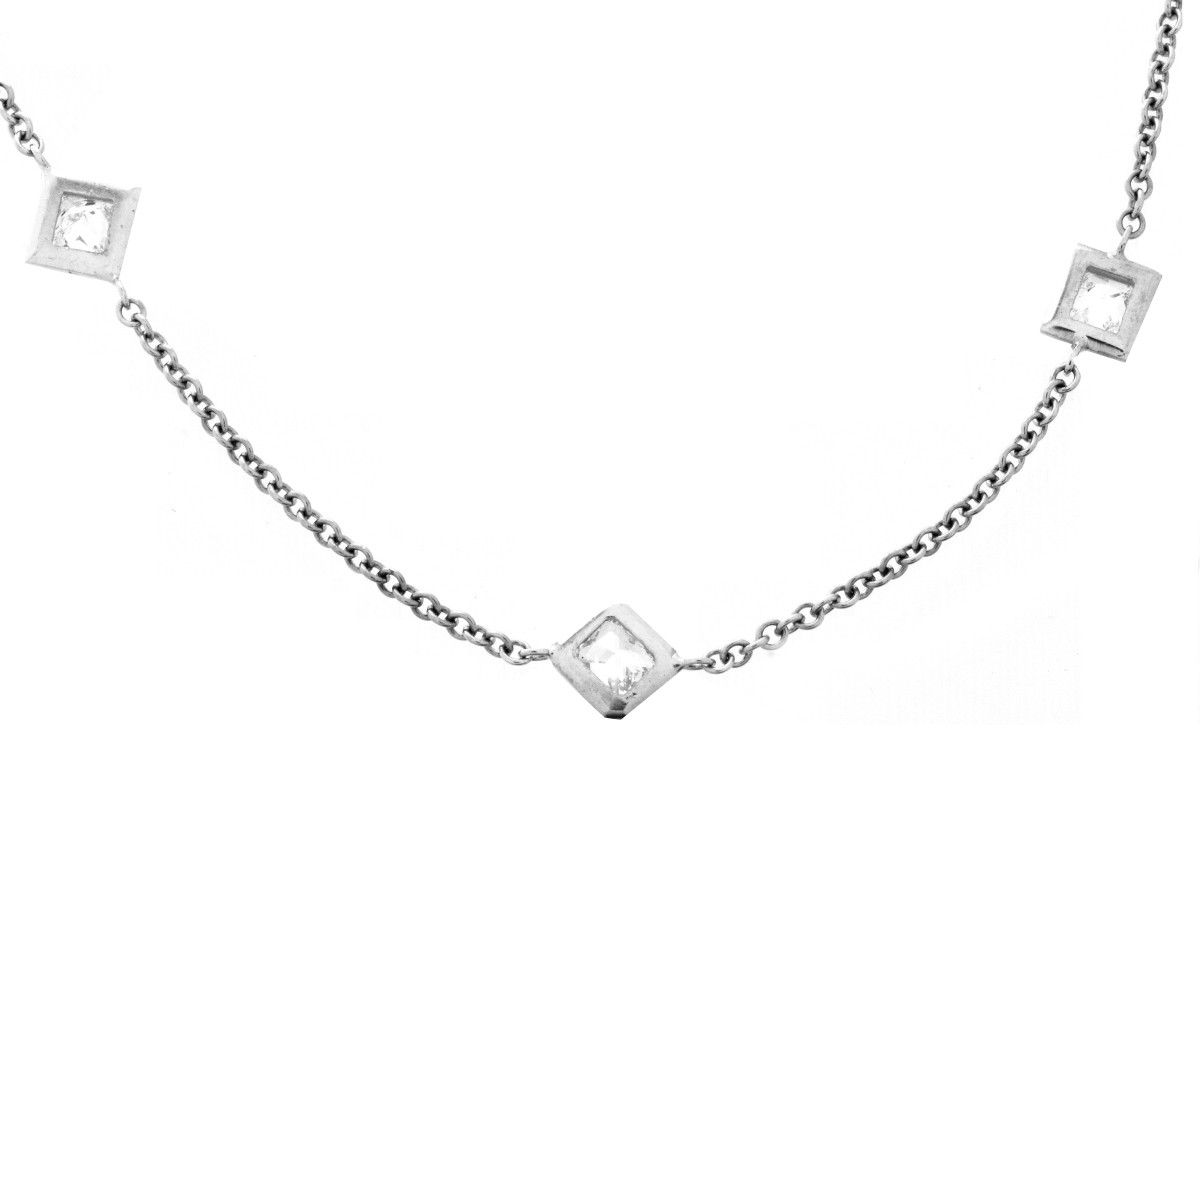 12.70 Carat Diamond and 18K Necklace